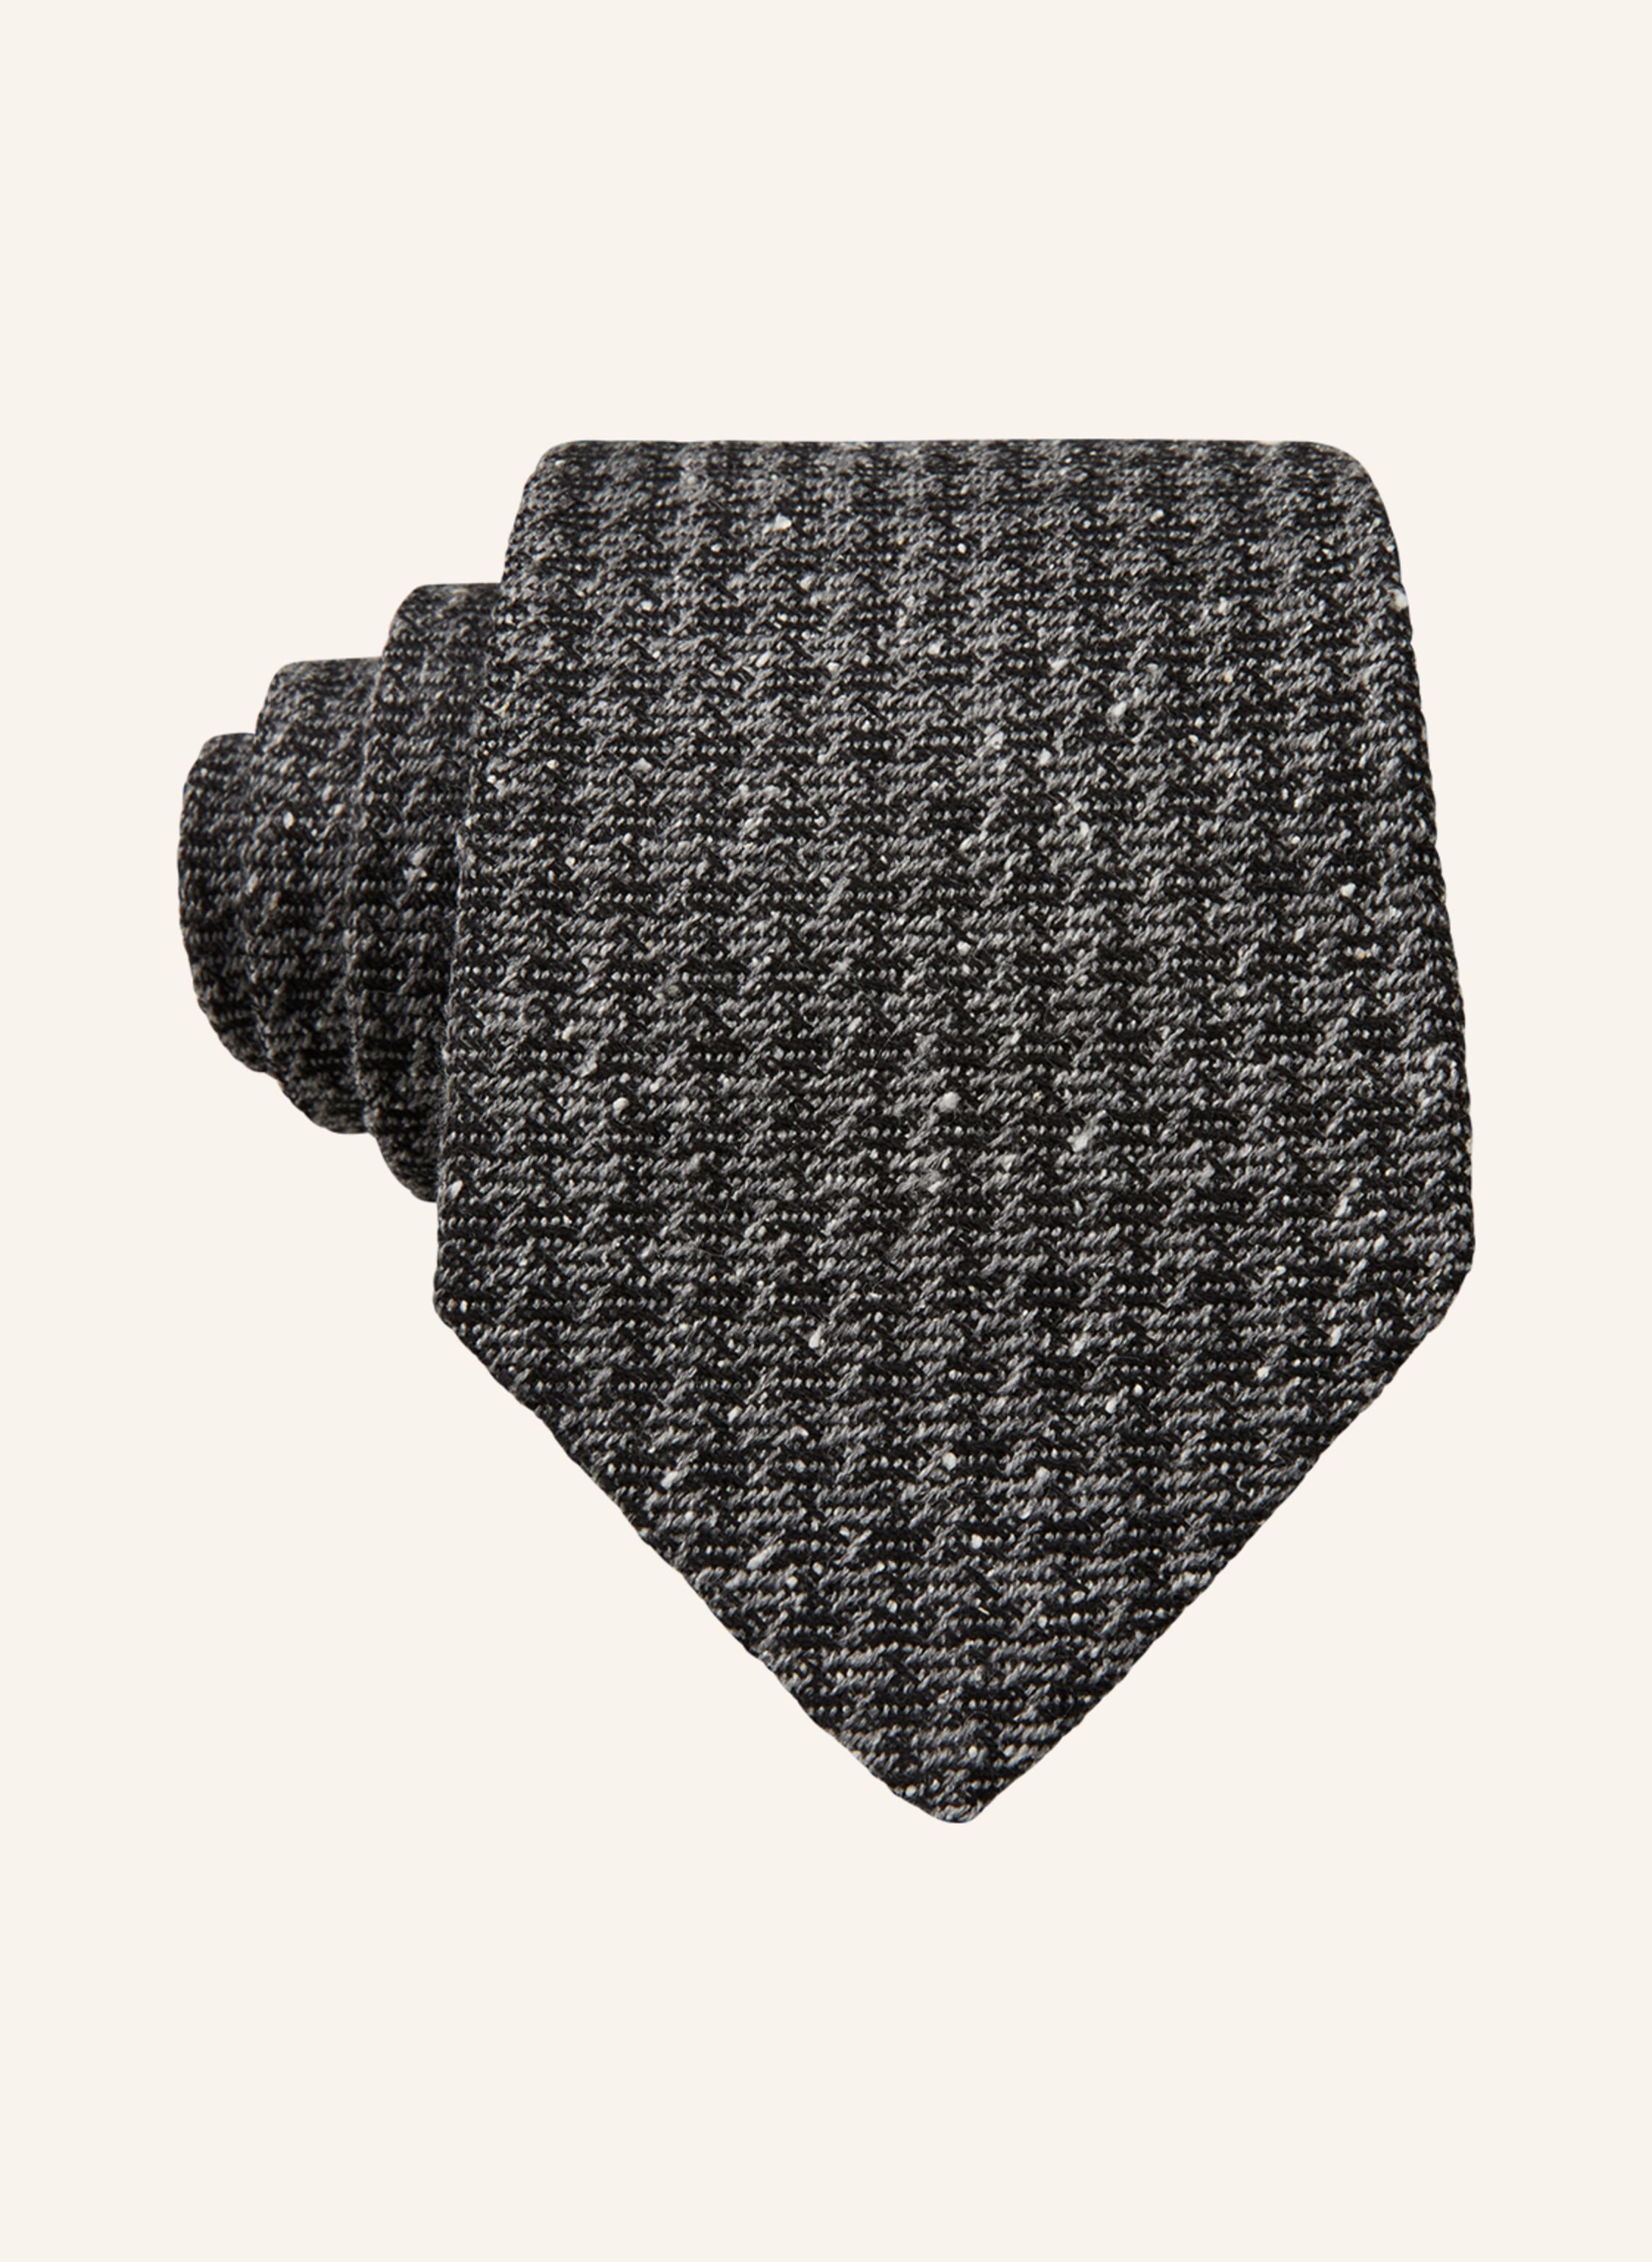 OLYMP Krawatte in grau schwarz